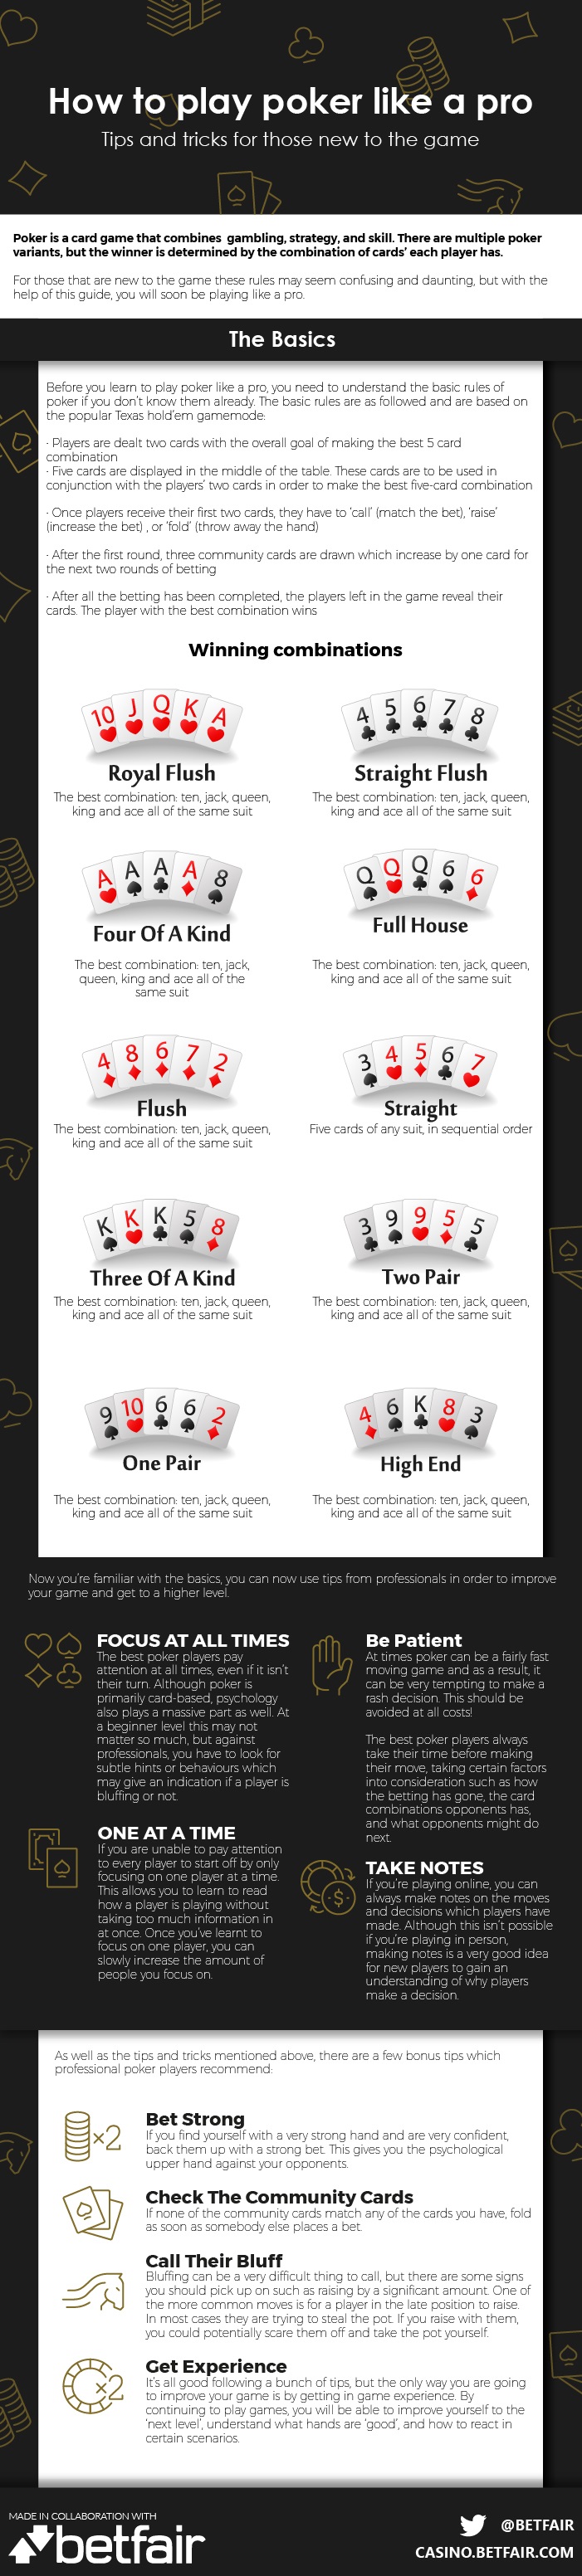 pokerlikeaproinfographic